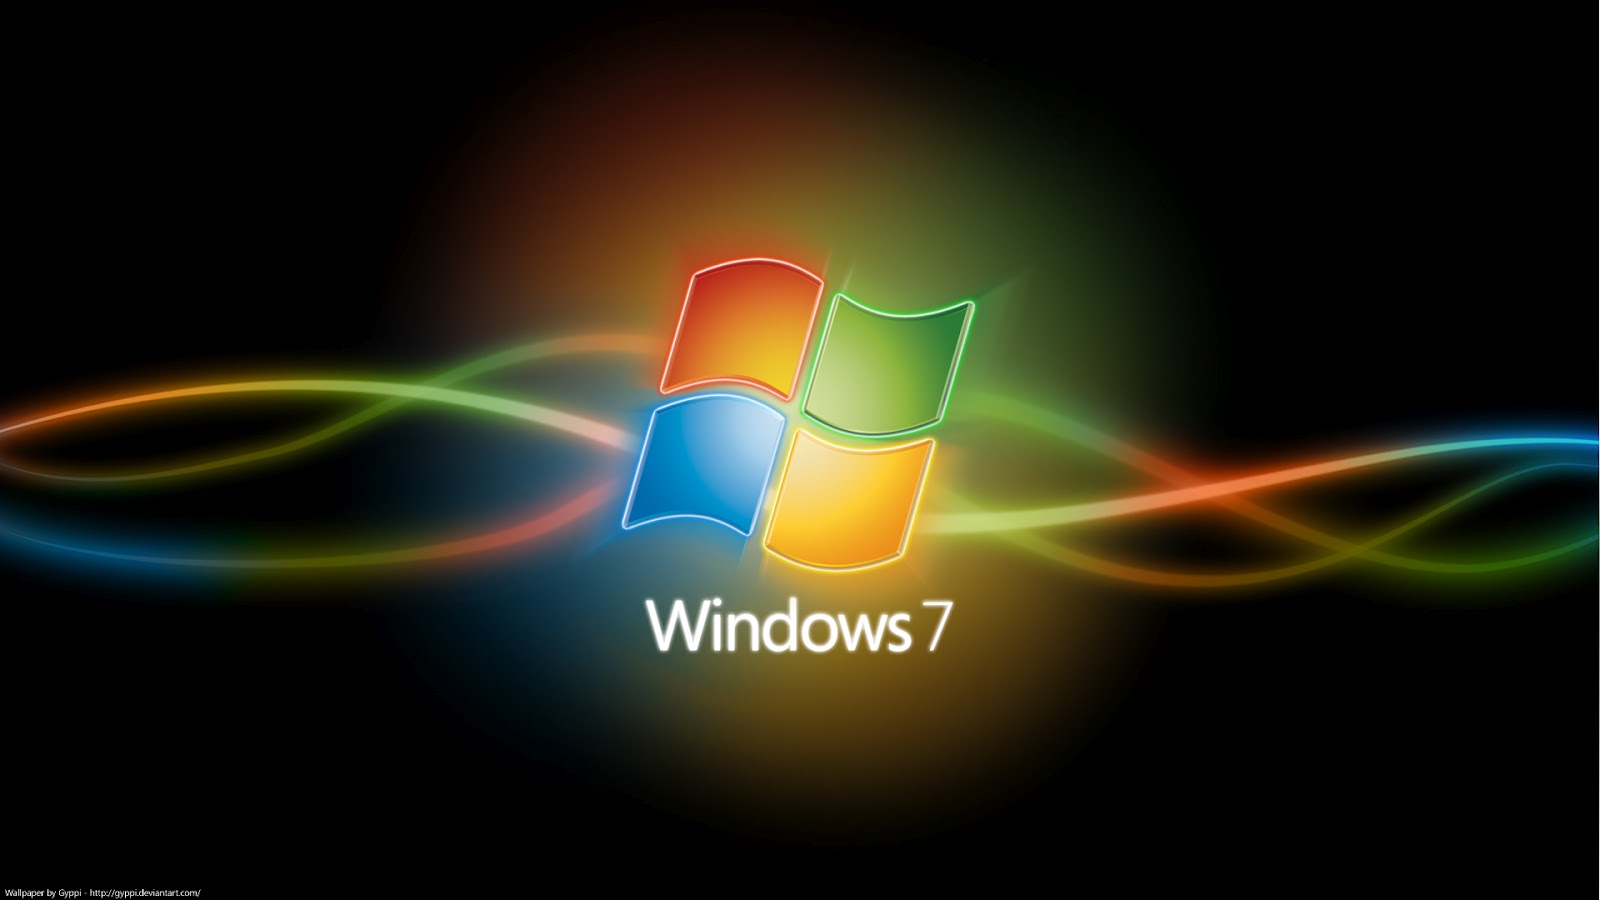 http://4.bp.blogspot.com/-k54x2DLH1Jk/T9DzhgyMDWI/AAAAAAAAAiM/NZXx4cLqFTA/s1600/windows-7-wallpaper-hd-1.jpg